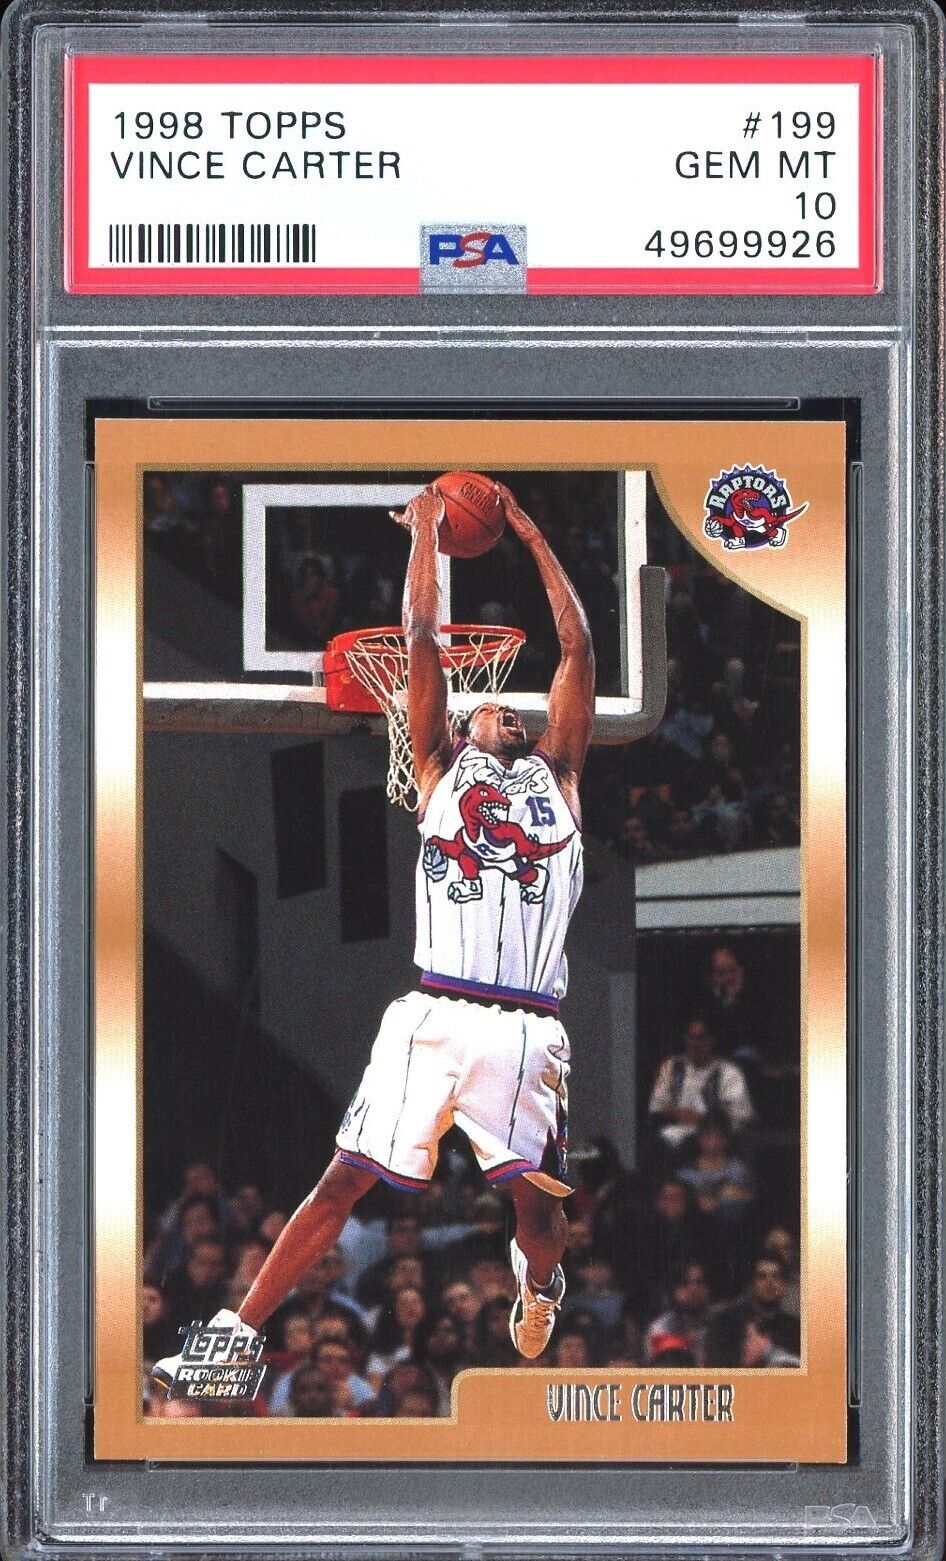 Vince Carter RC #199 Rookie Card PSA 10 Gem Mint (Toronto Raptors) 1998-99 Topps